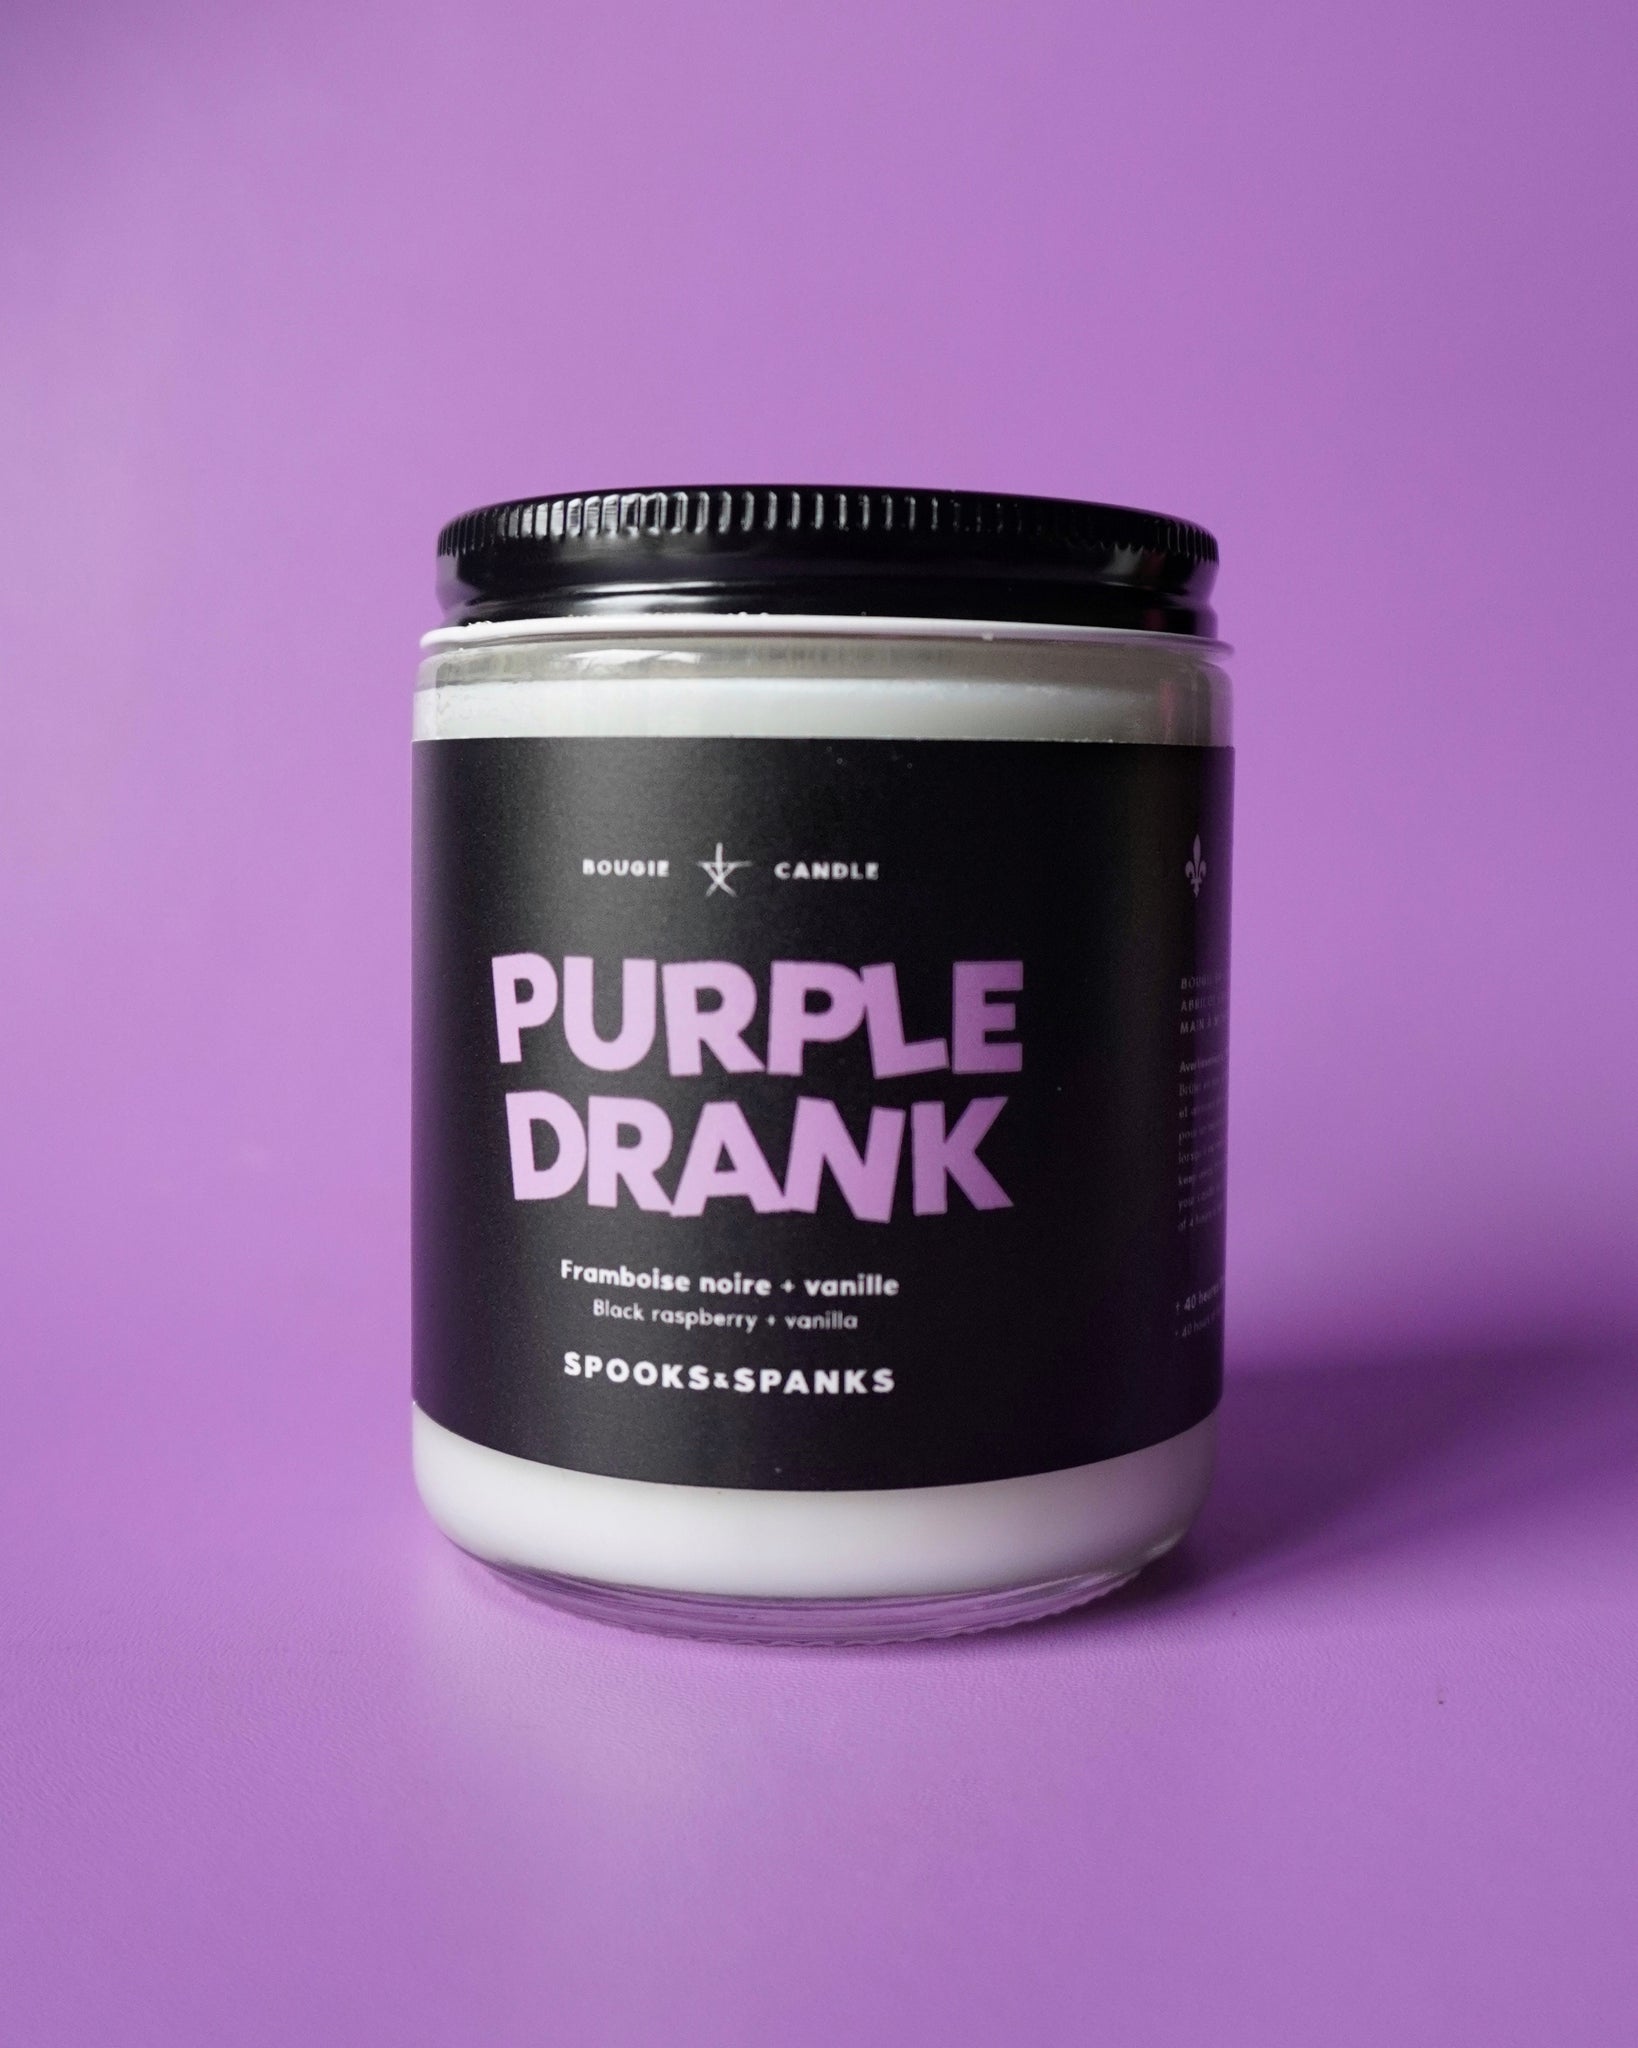 Bougie Purple Drank framboise noire + vanille